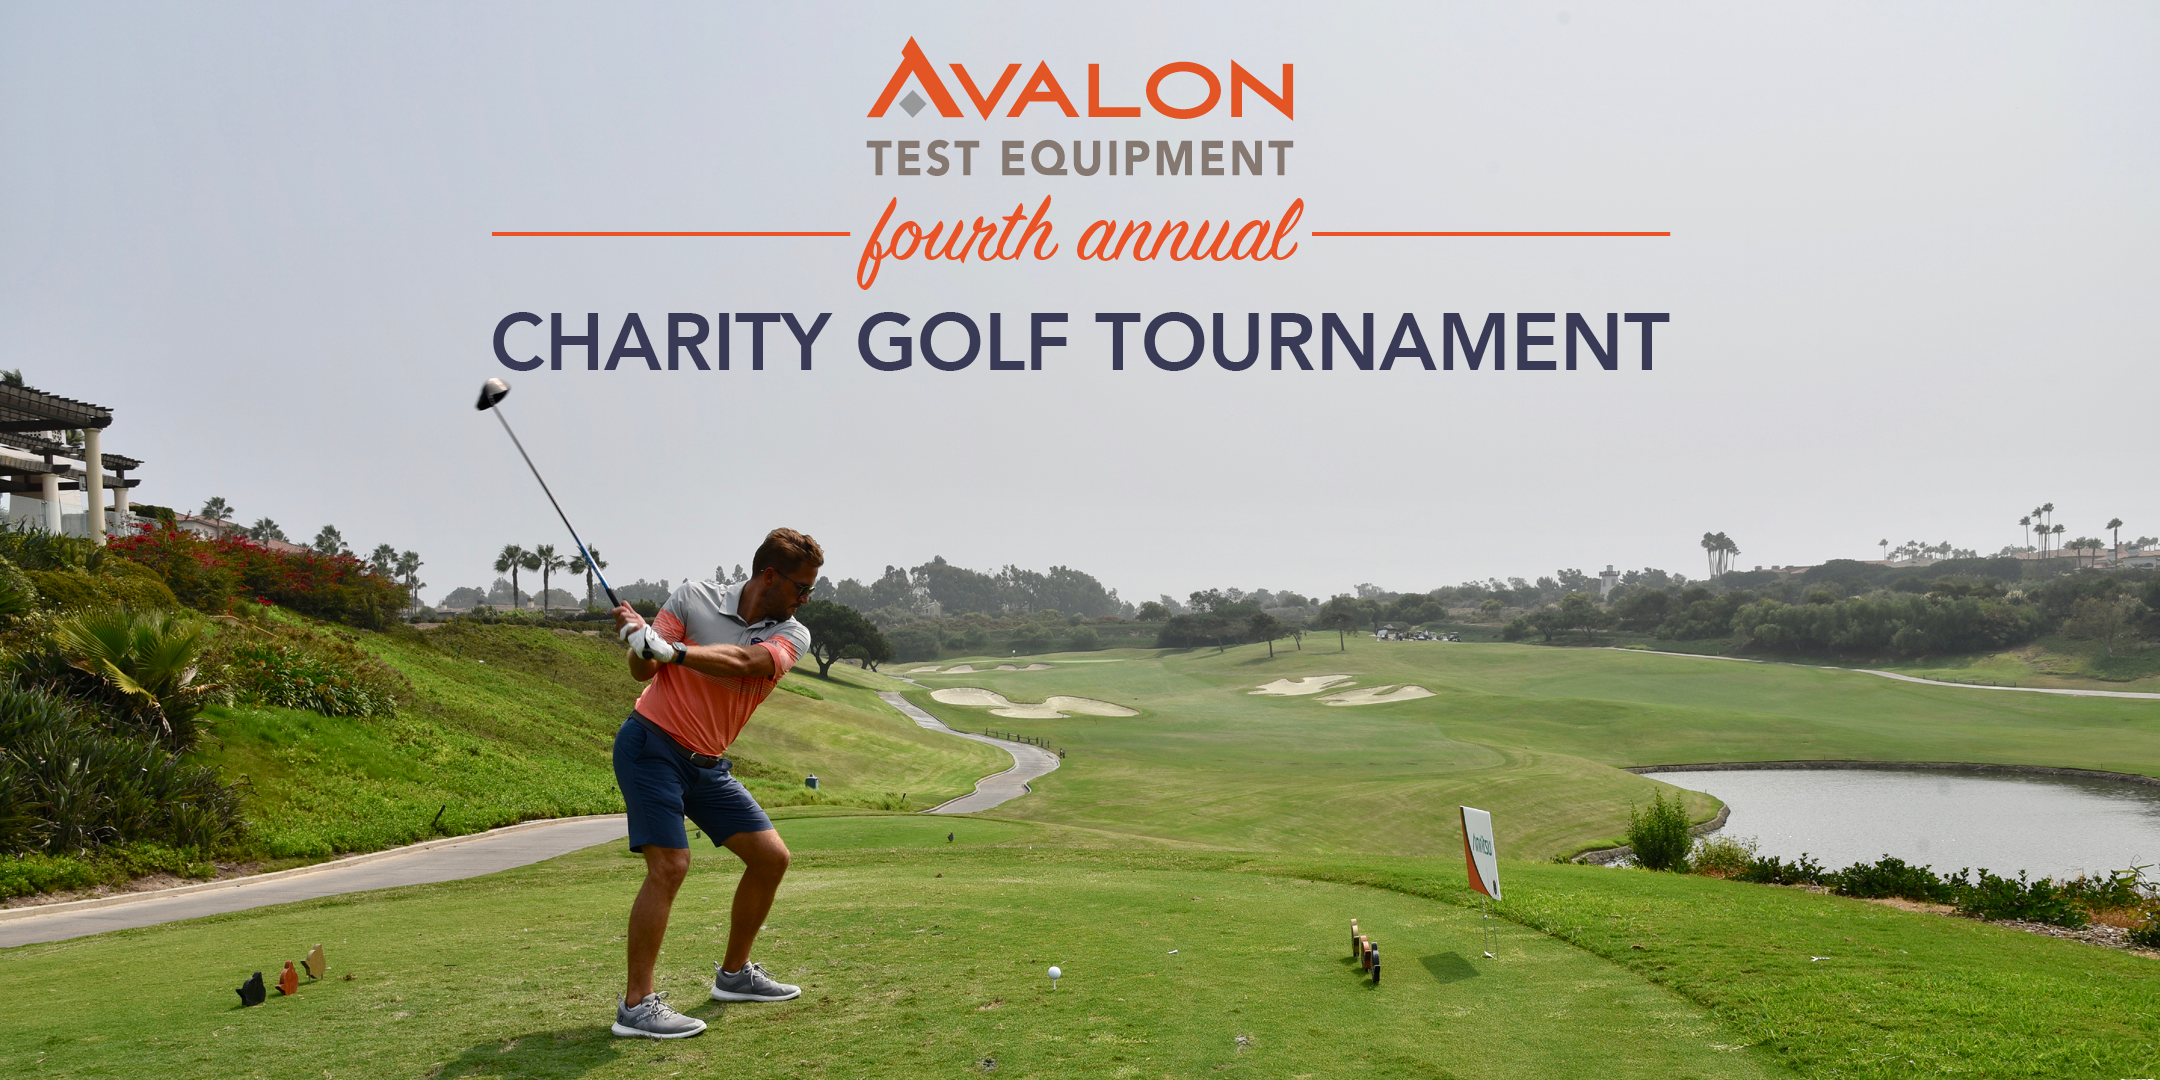 Avalon Test Equipment's Fourth Annual Charity Golf Tournament